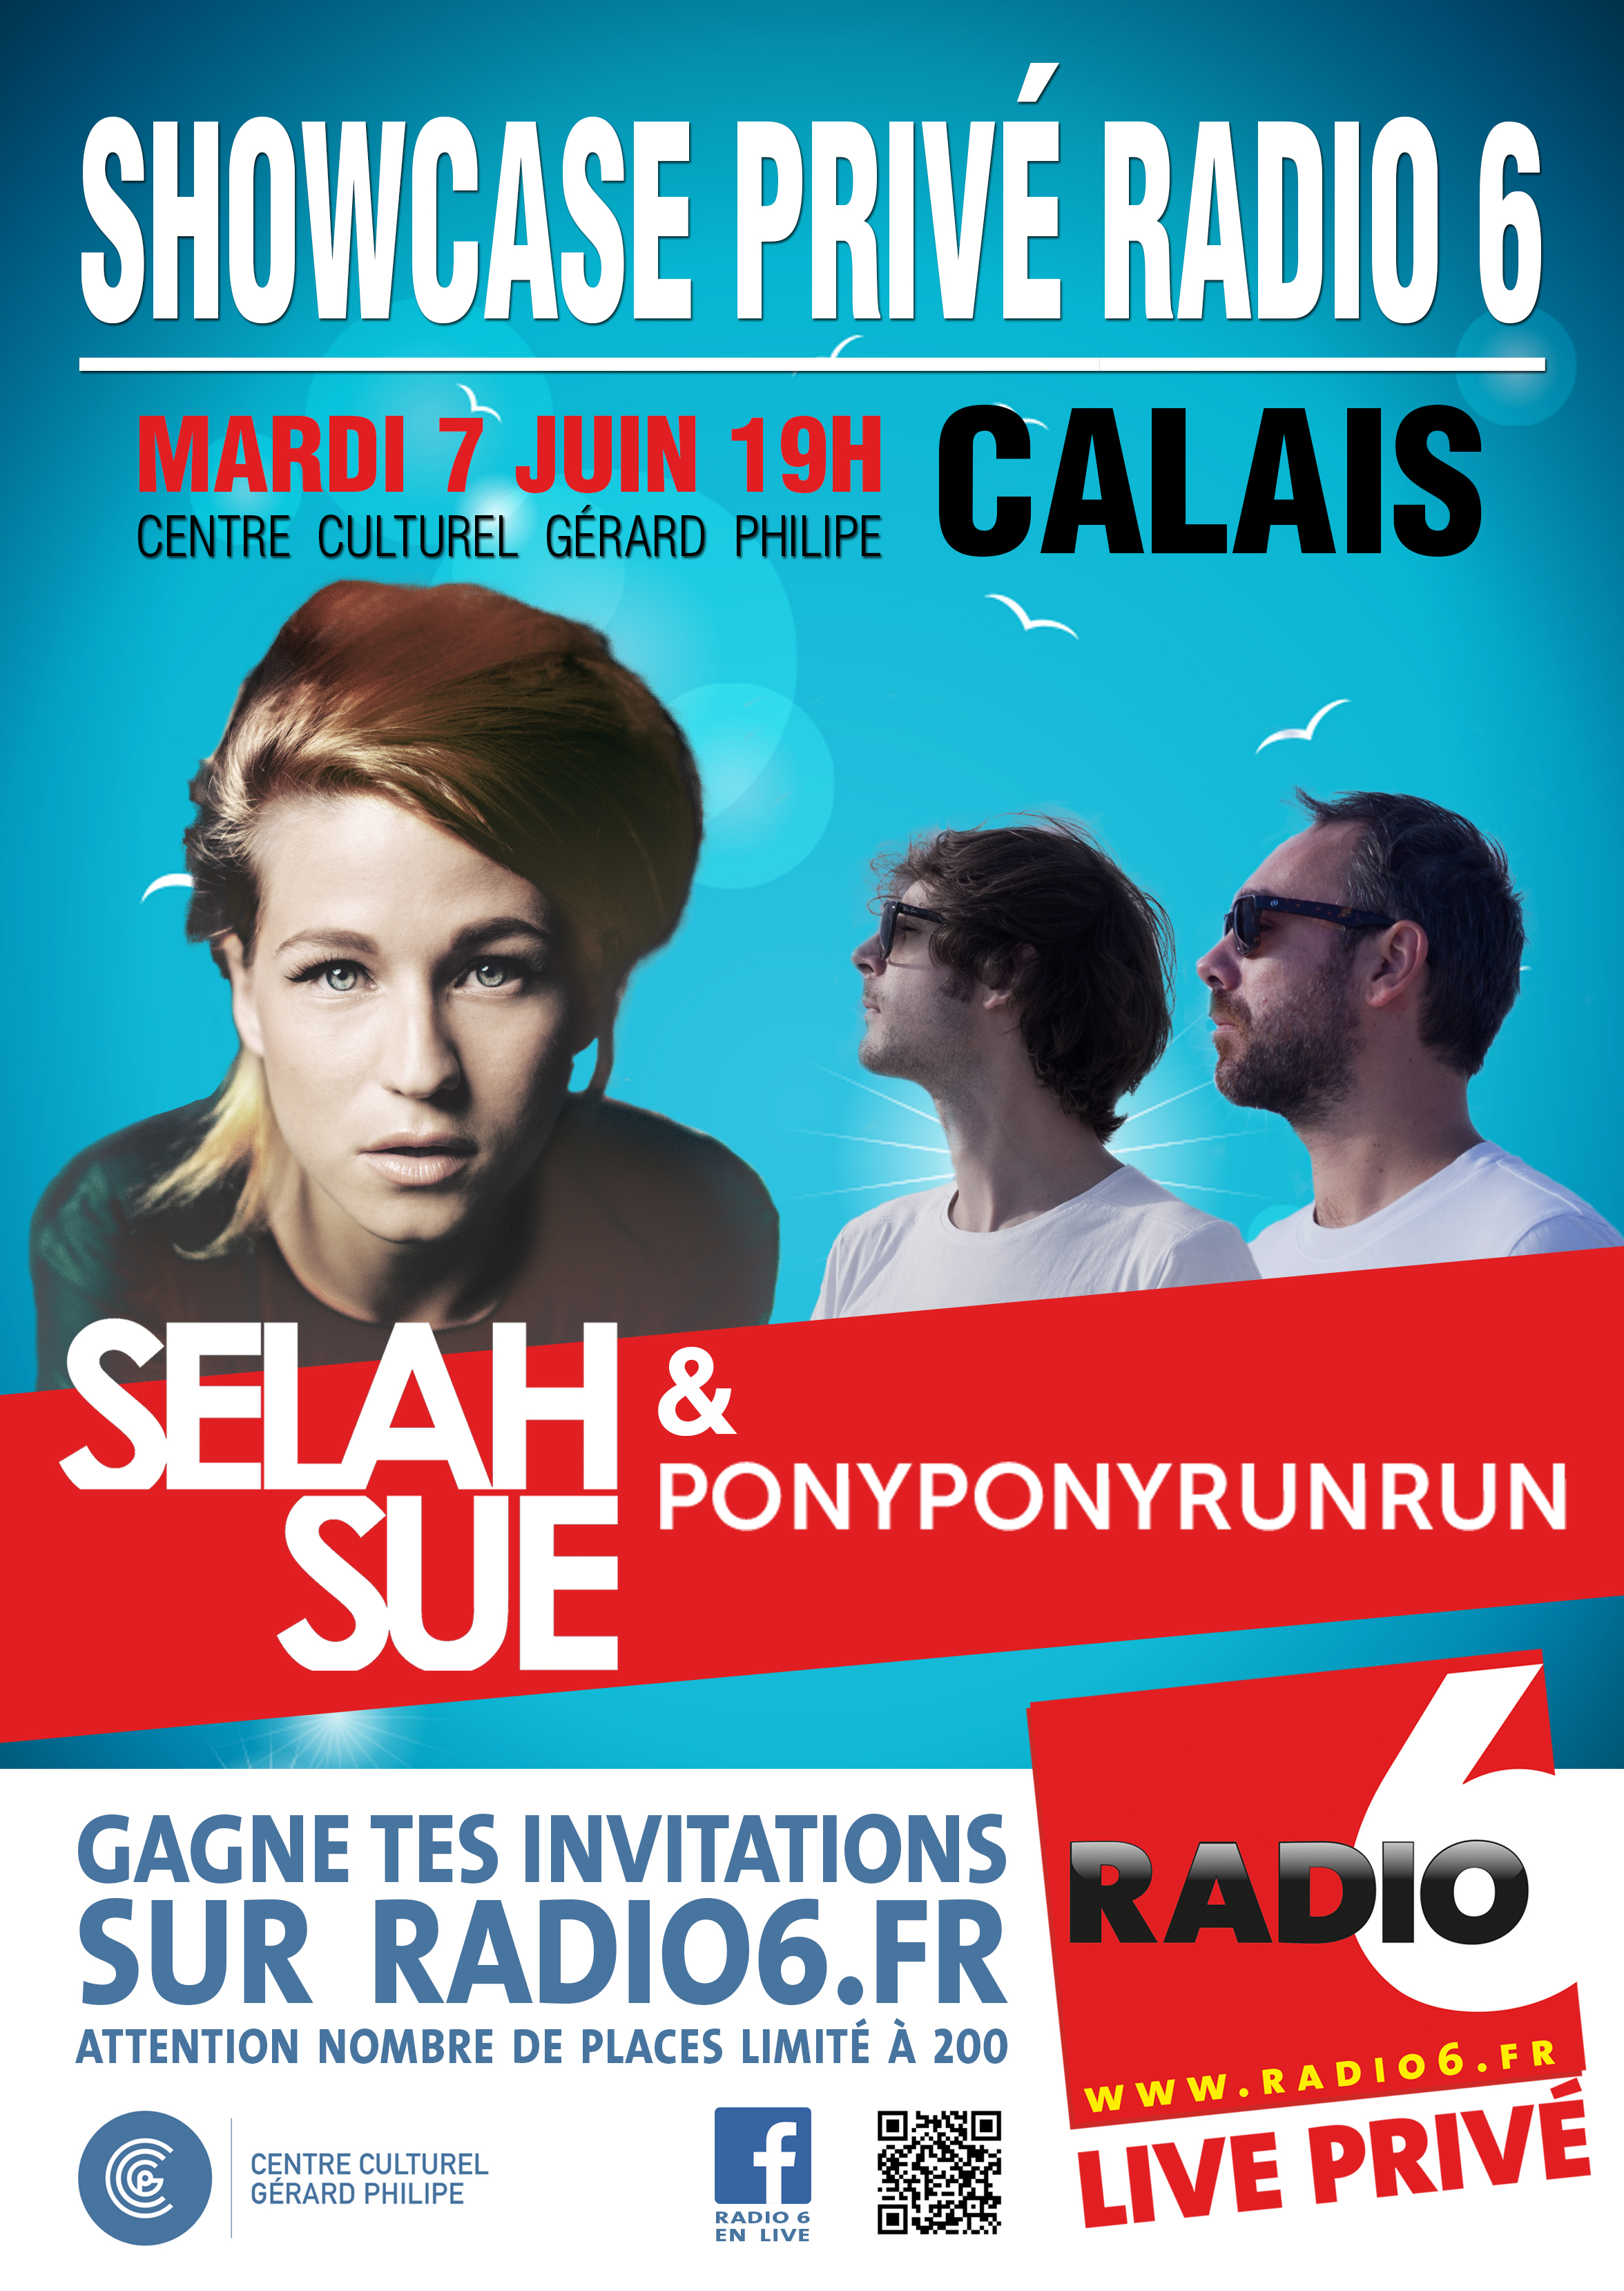 Selah Sue en showcase avec Radio 6